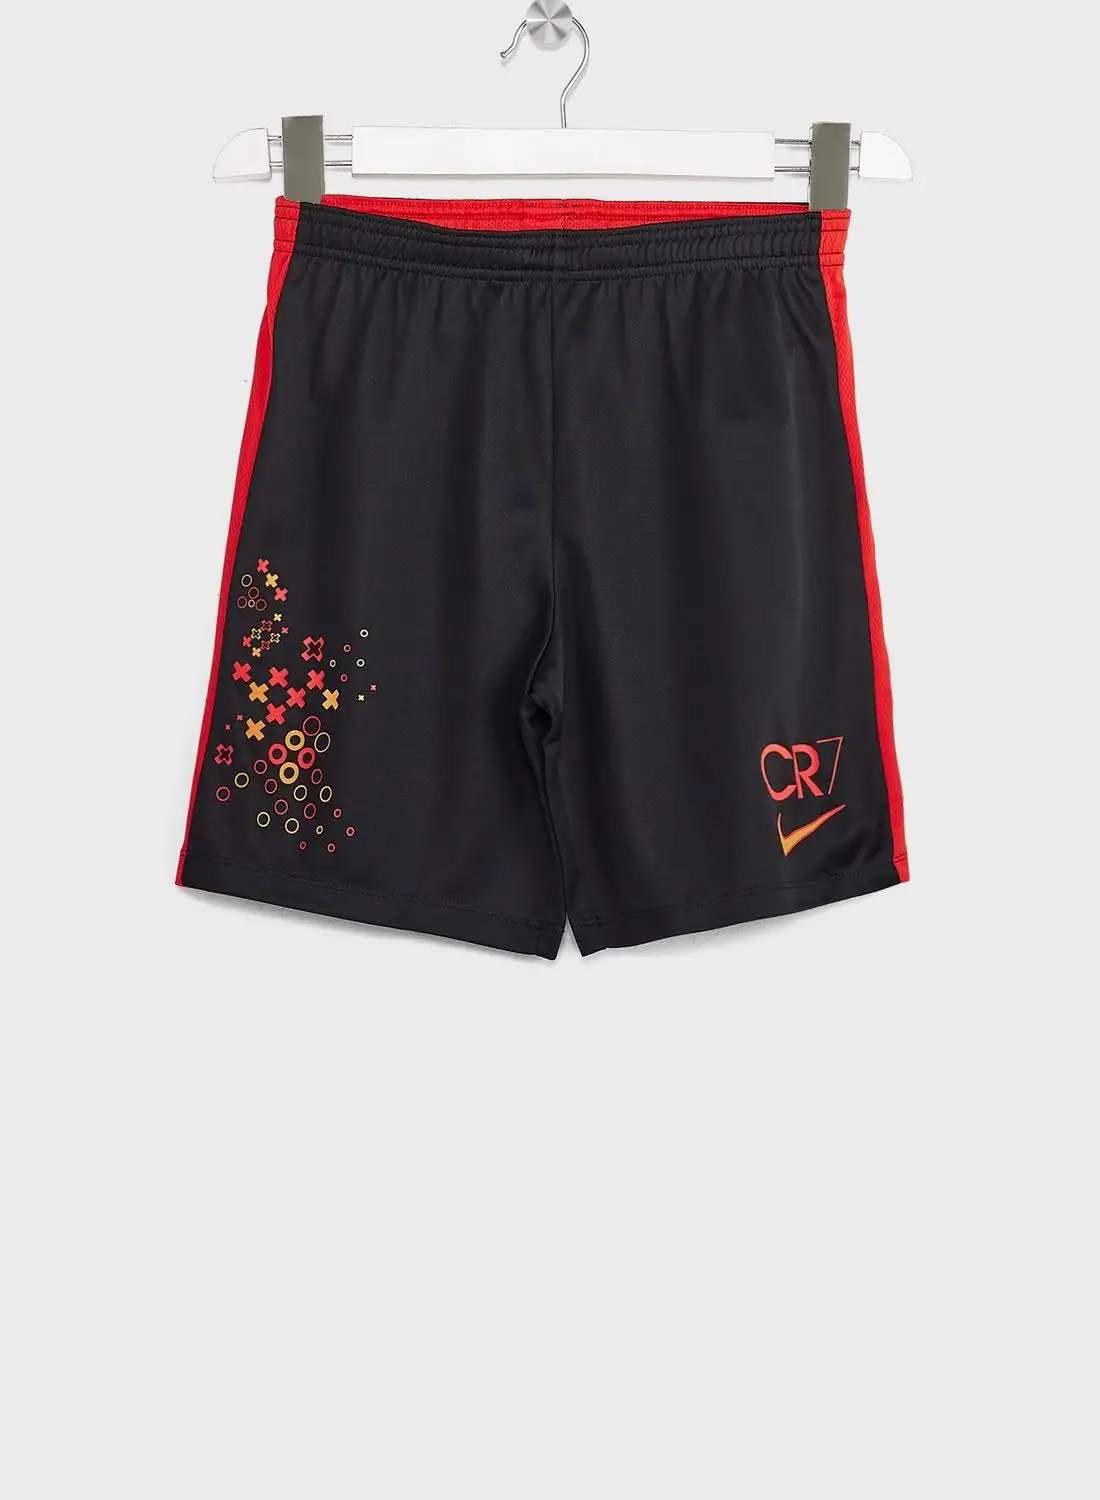 Nike Cr7 Dri-Fit Acd23 Shorts